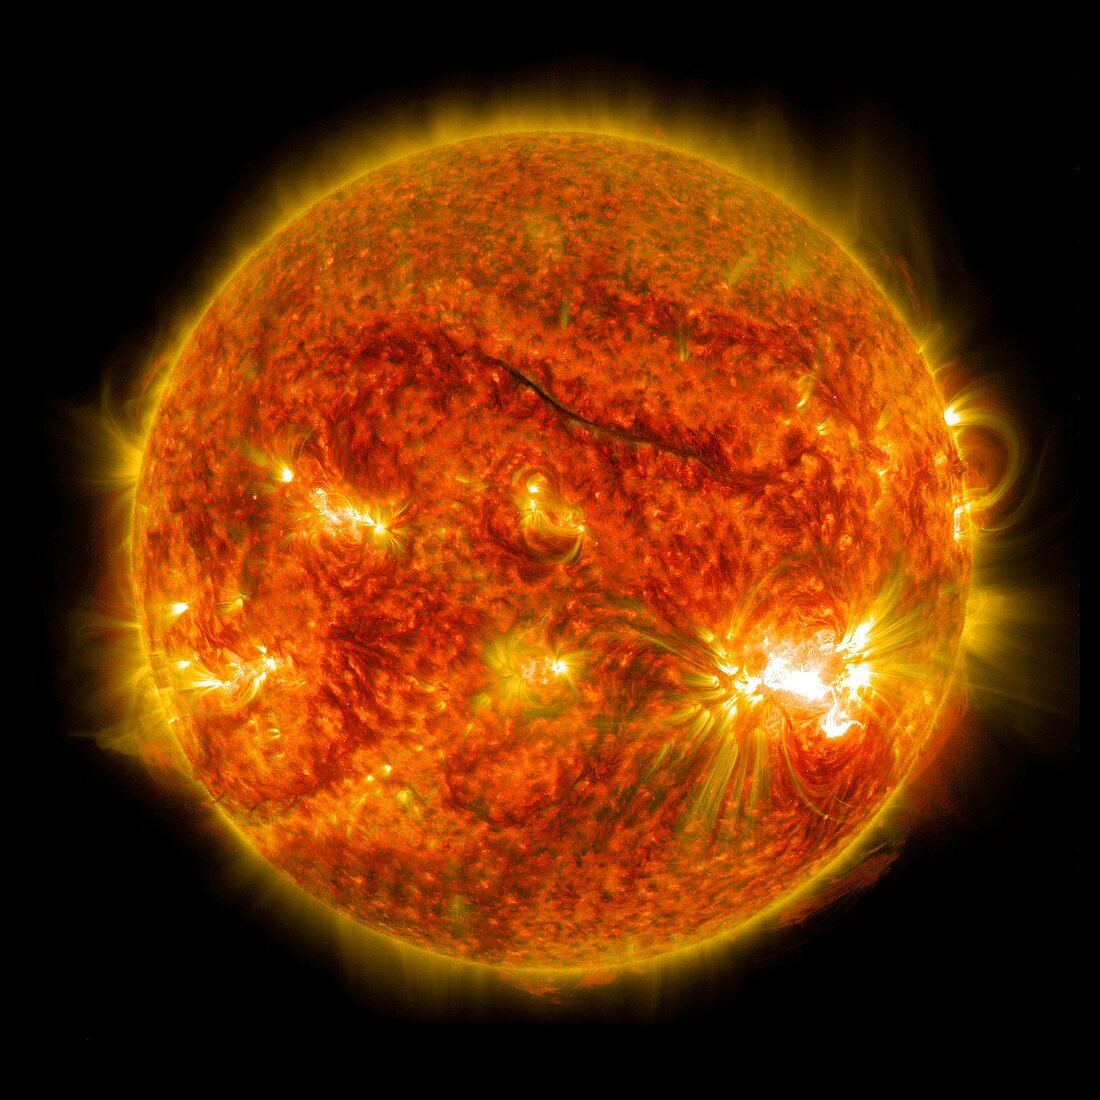 X2-class solar flare,SDO image